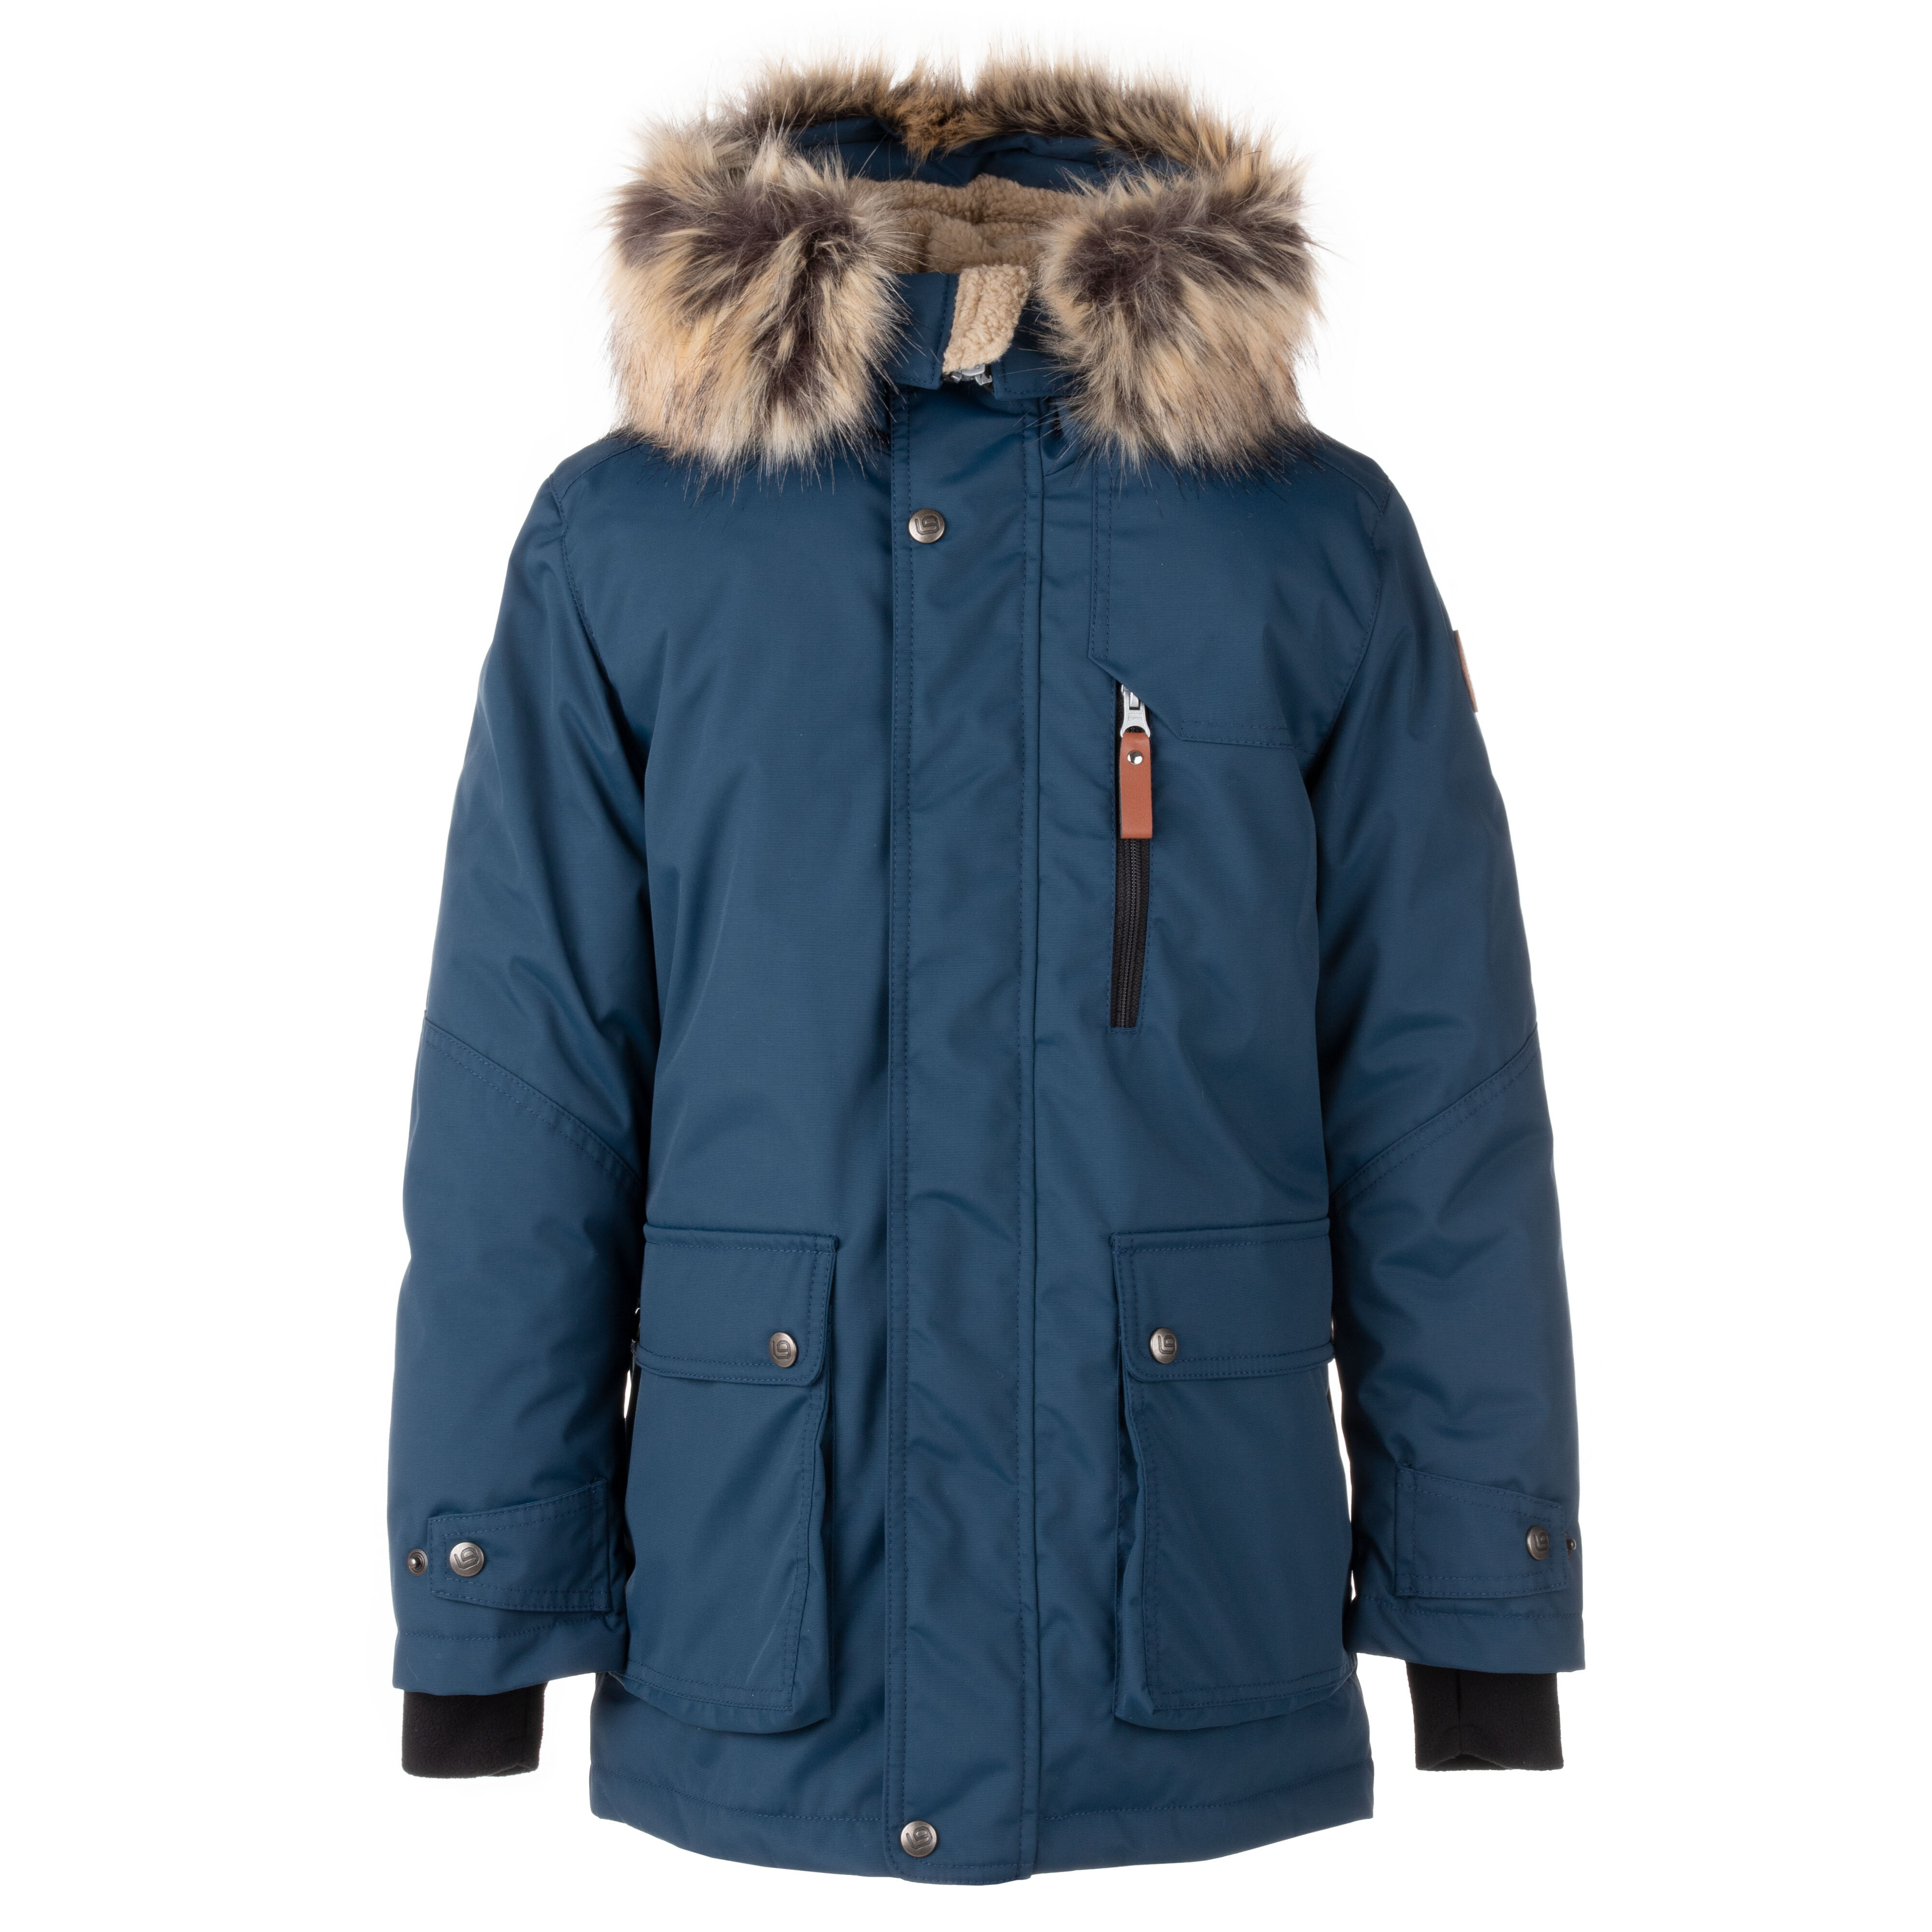 Купить Куртка-парка Kerry JARI K21668/669 цв. синий р. 158,